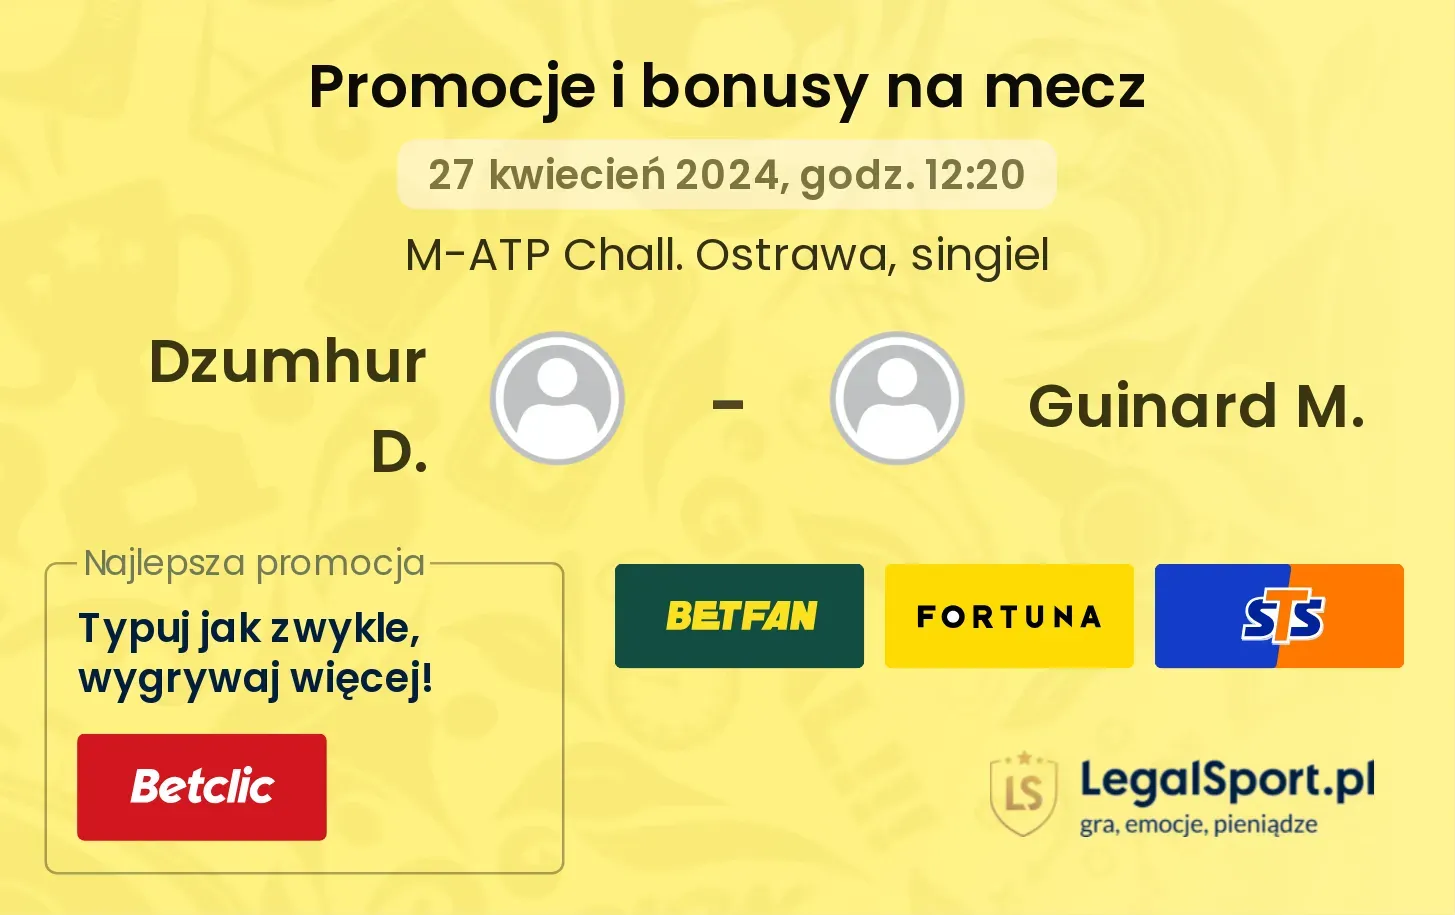 Dzumhur D. - Guinard M. promocje bonusy na mecz